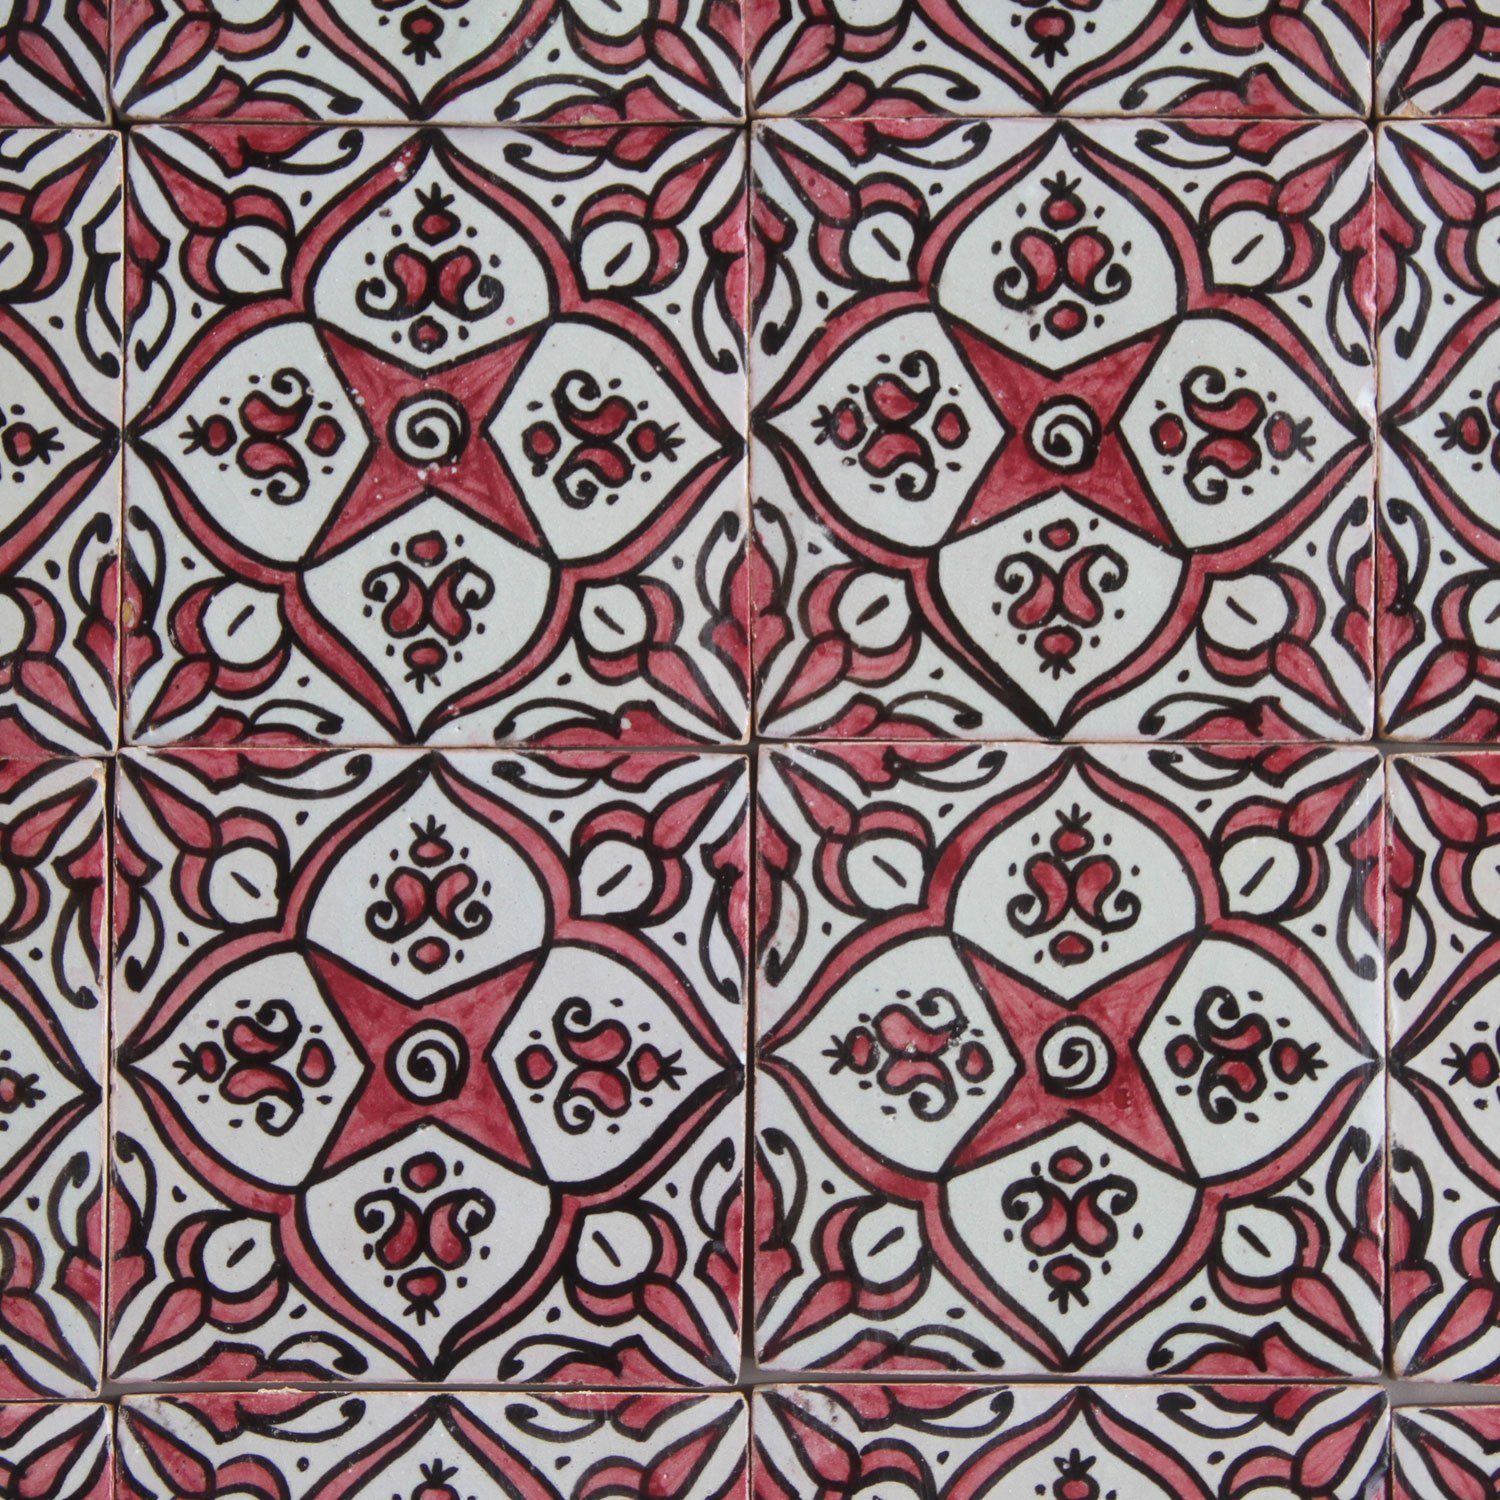 Casa Moro Wandfliese 10x10 handbemalte Mehrfarbig, Marokkanische cm Handbemalt Moro Fliese Casa Meliha HBF8080, Handgefertigt